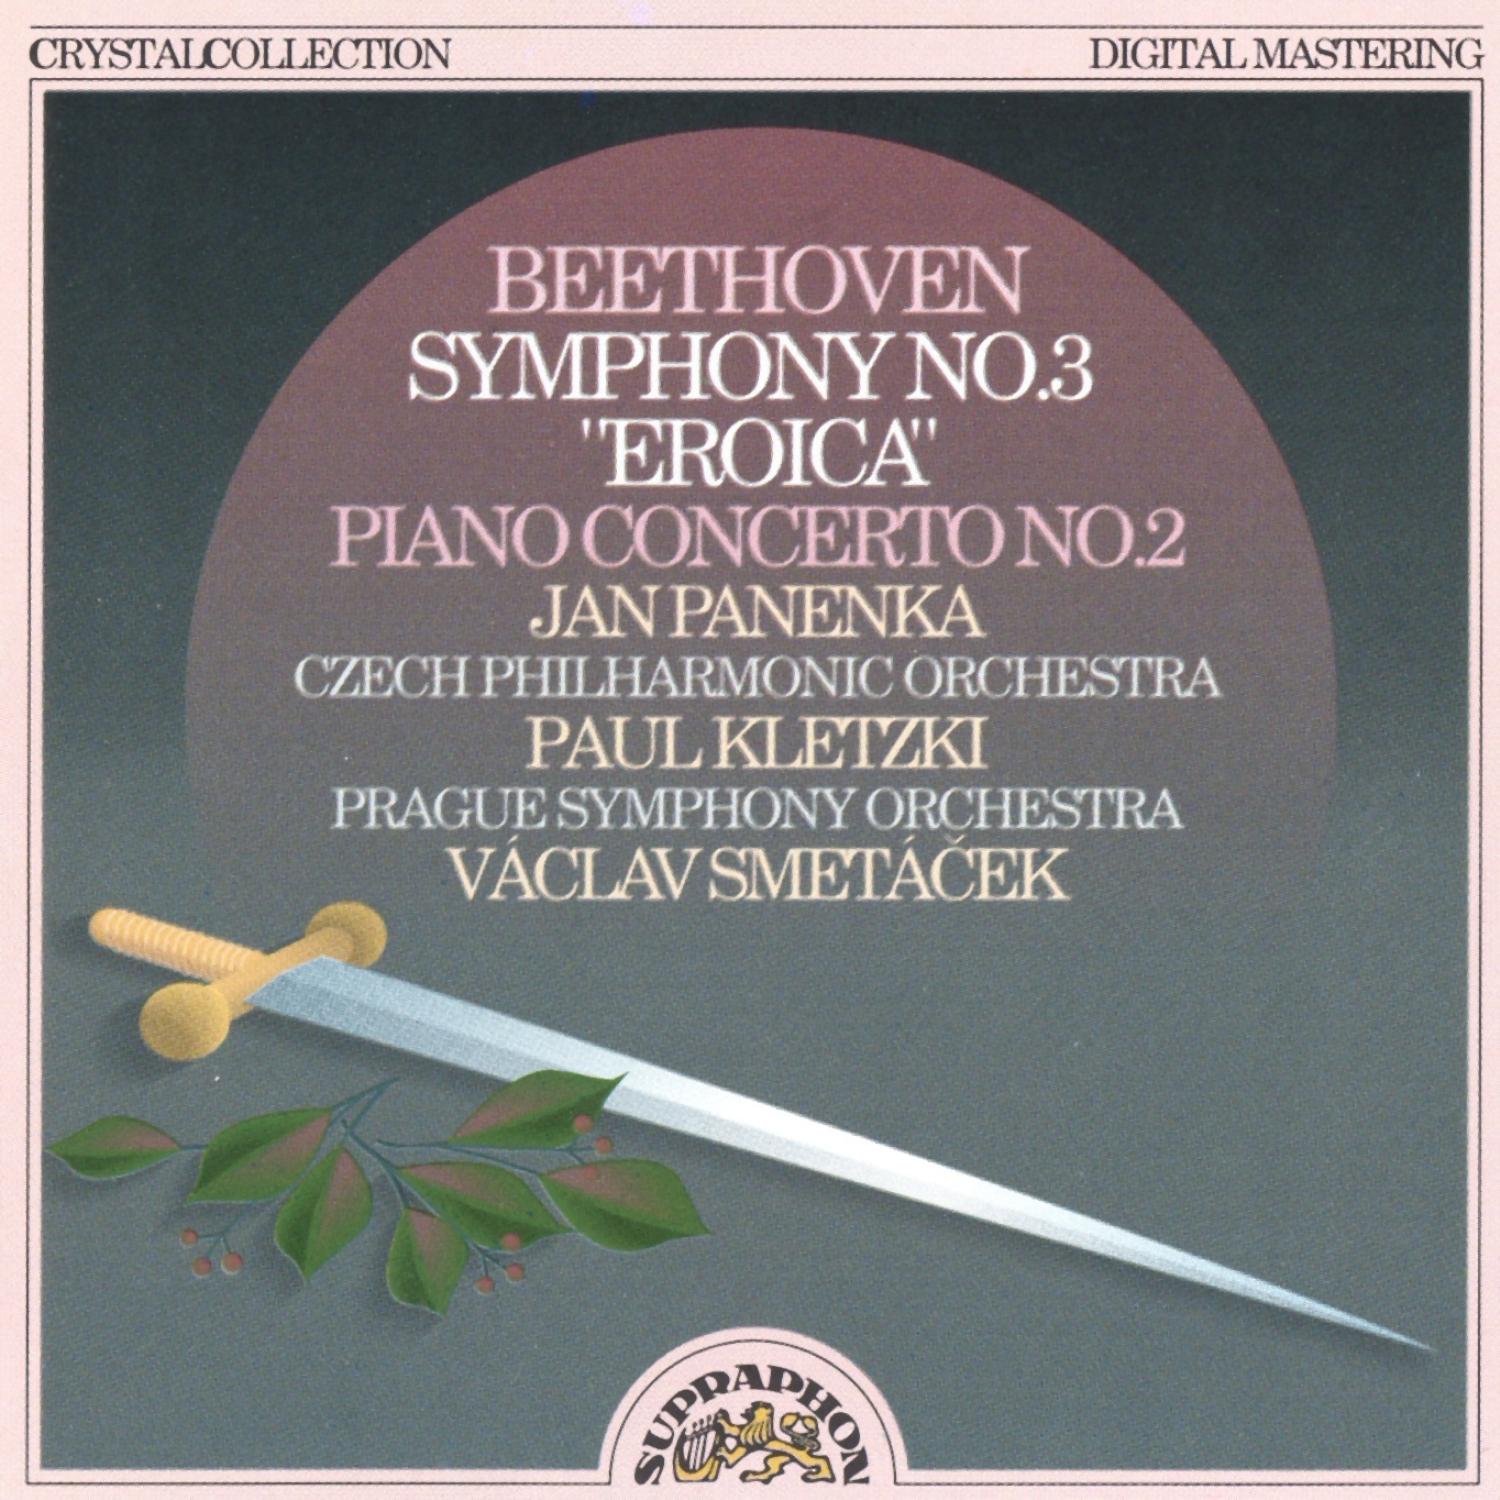 Beethoven: Symphony No. 3 "Eroica", Piano Concerto No. 2